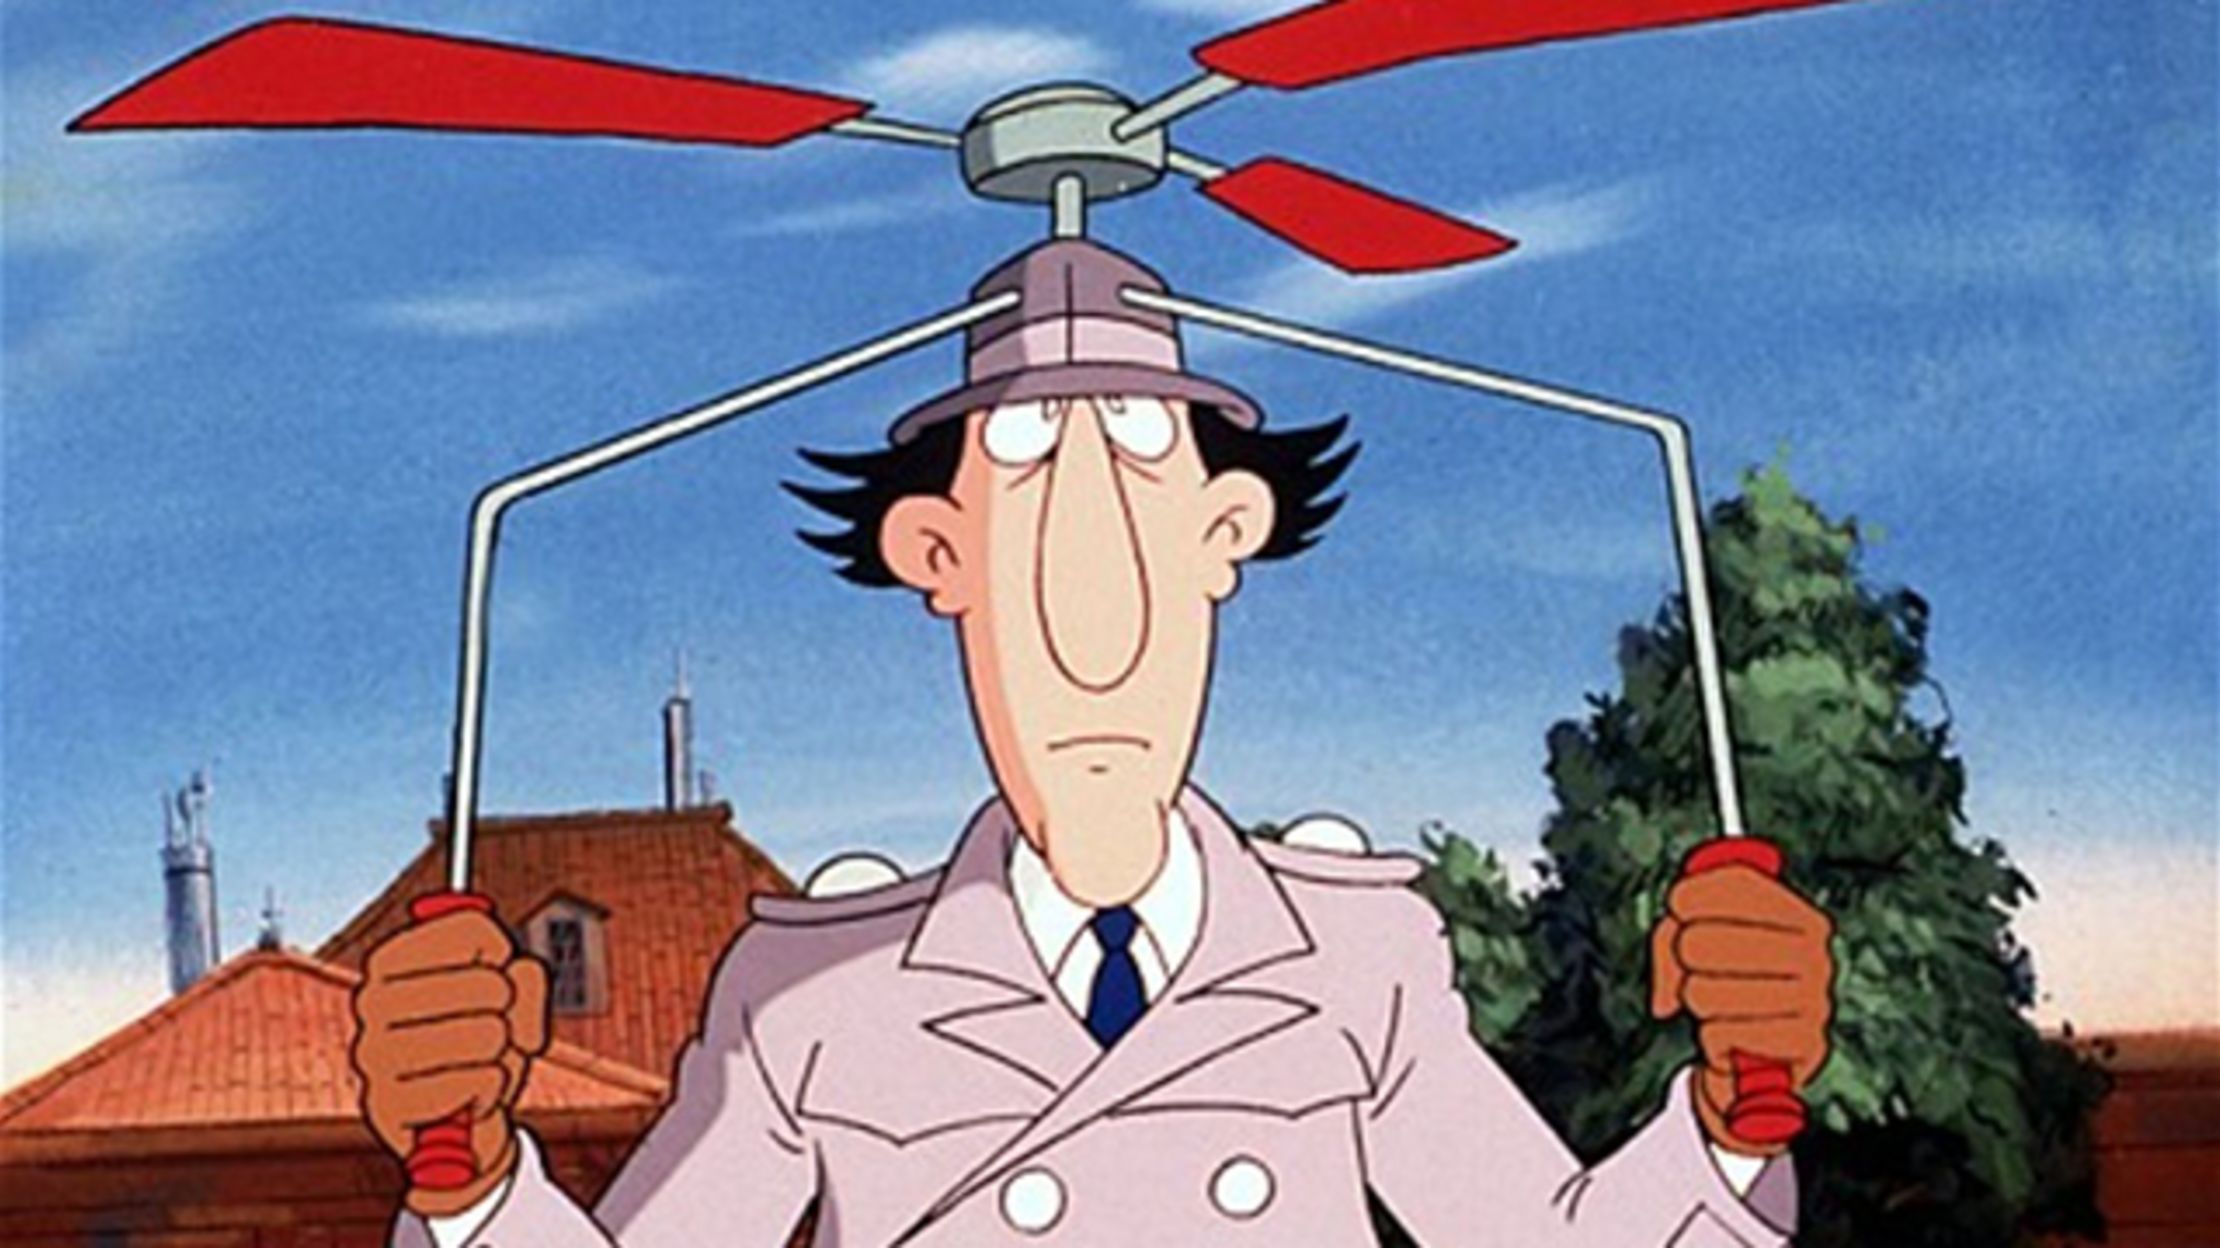 inspector-gadget-legendary-1980-s-cartoon-detective